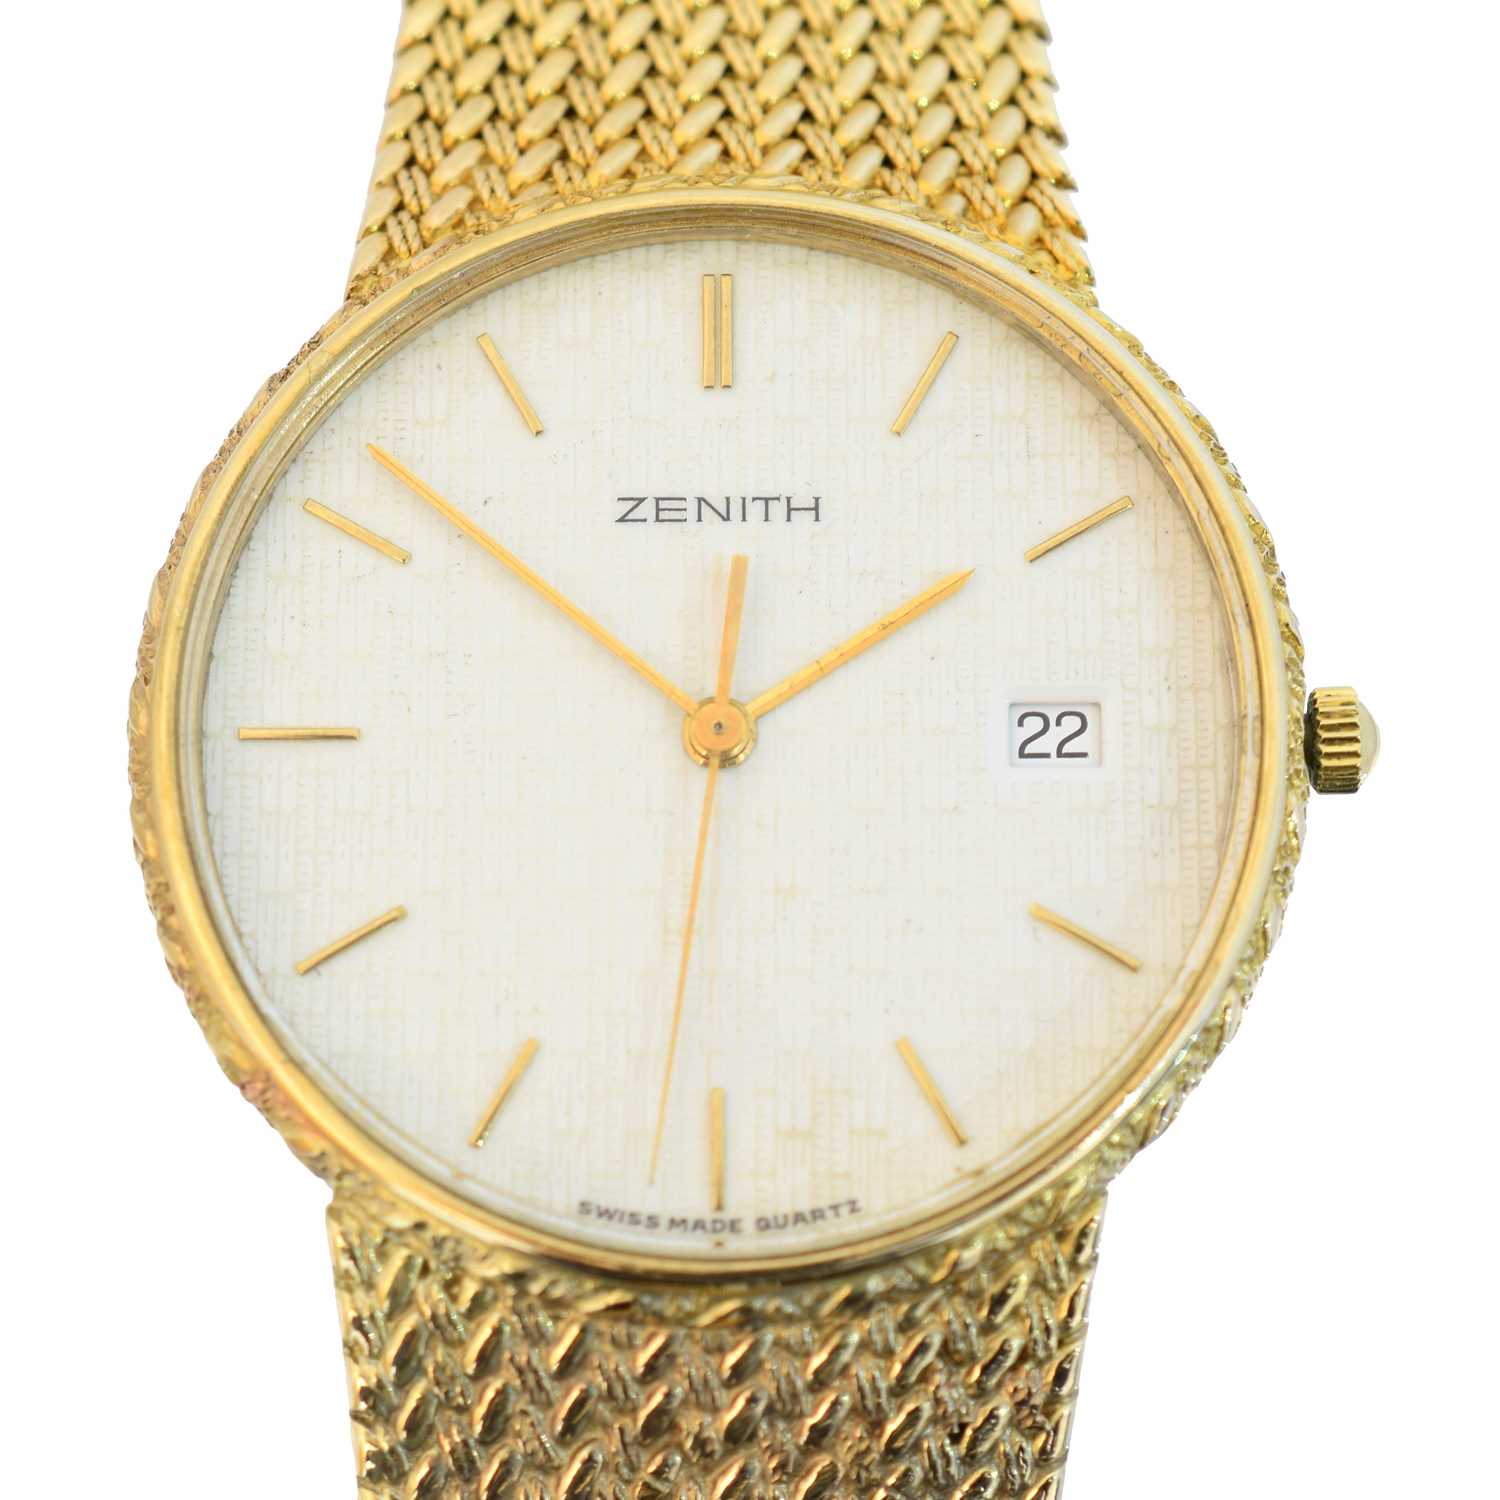 162A - A 9ct gold Zenith wristwatch,